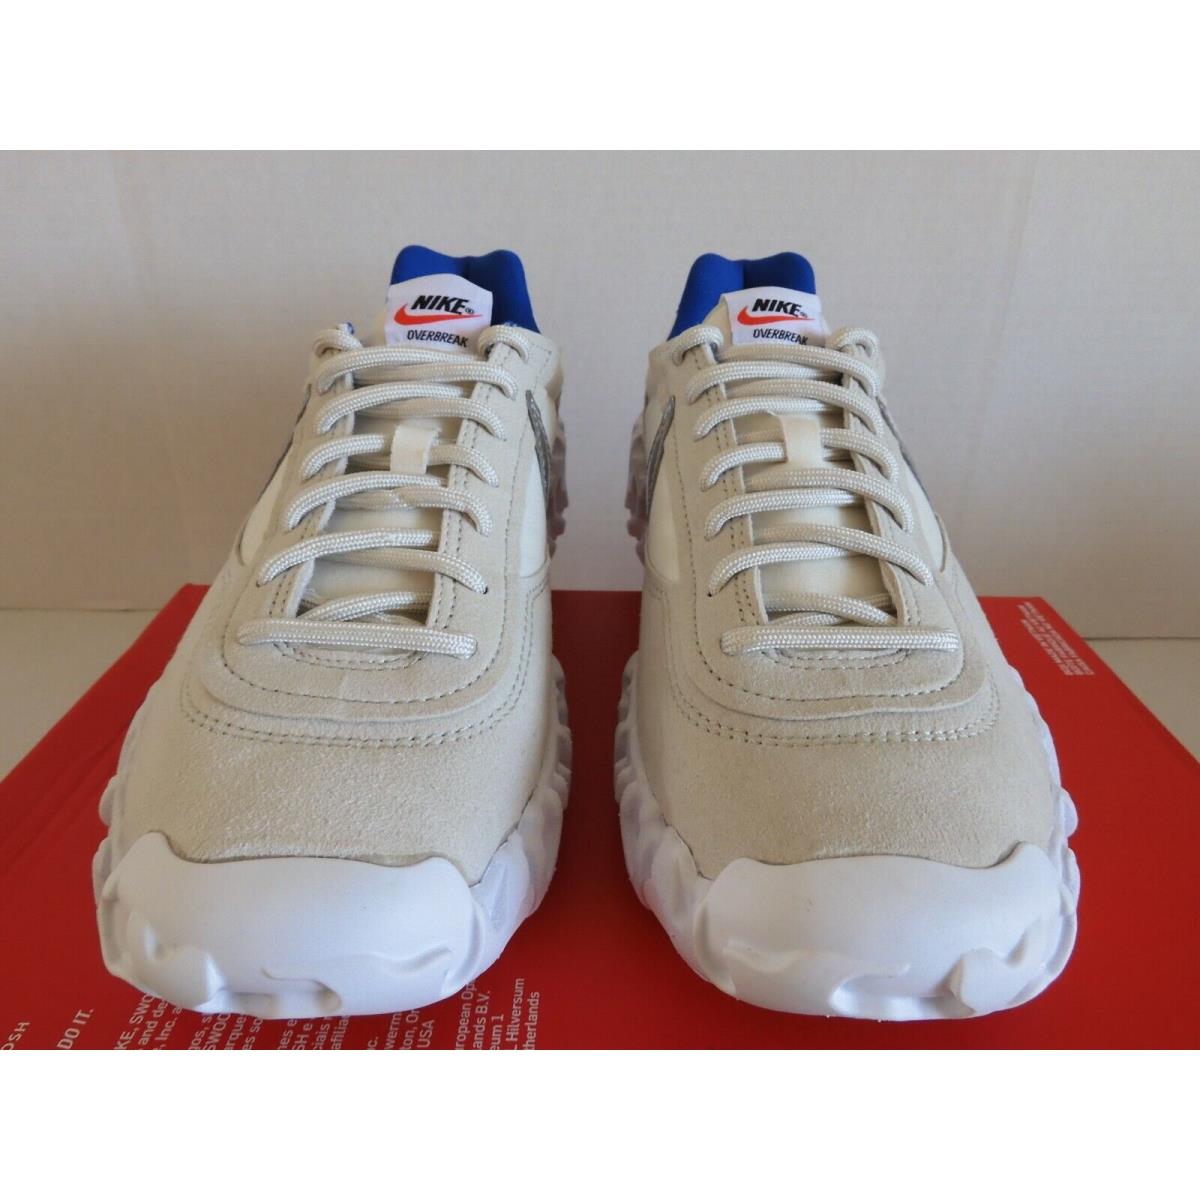 Nike shoes Overbreak - White 1